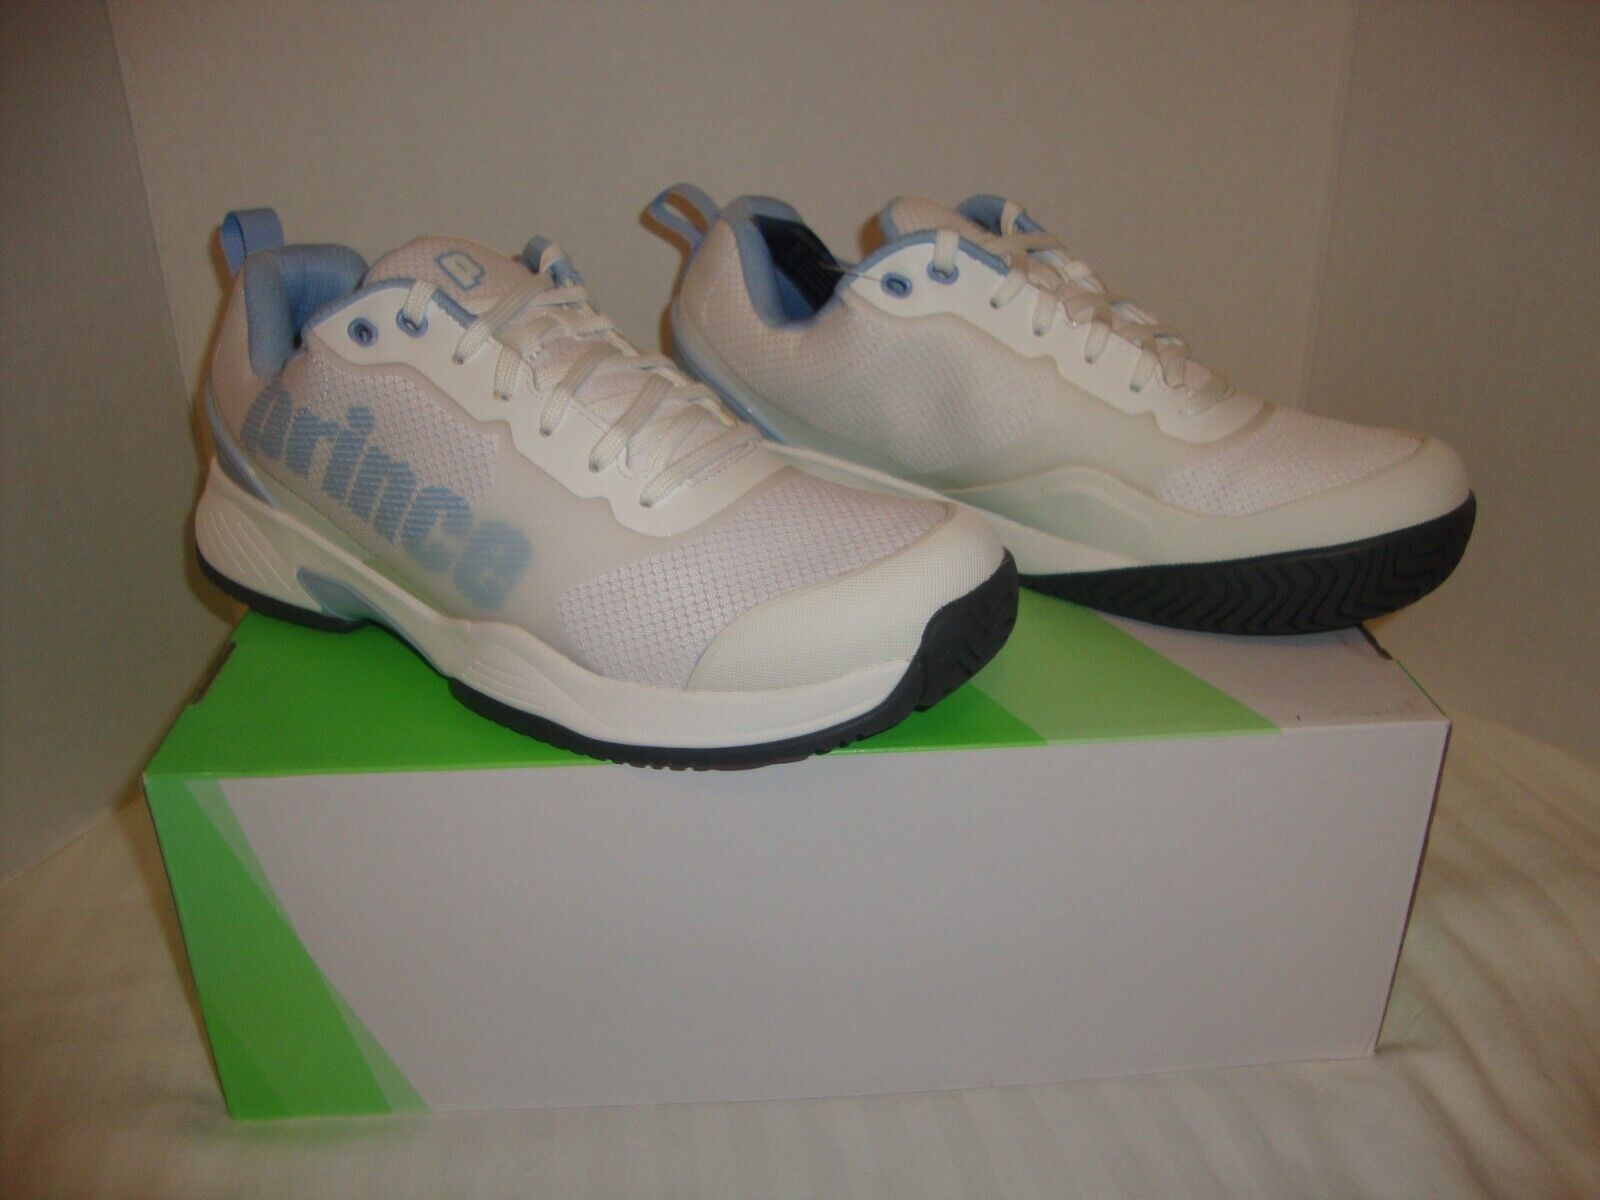 New Women Prince Pawts20 Cross-court Tennis Shoes Size 9.5 White & Light Blue